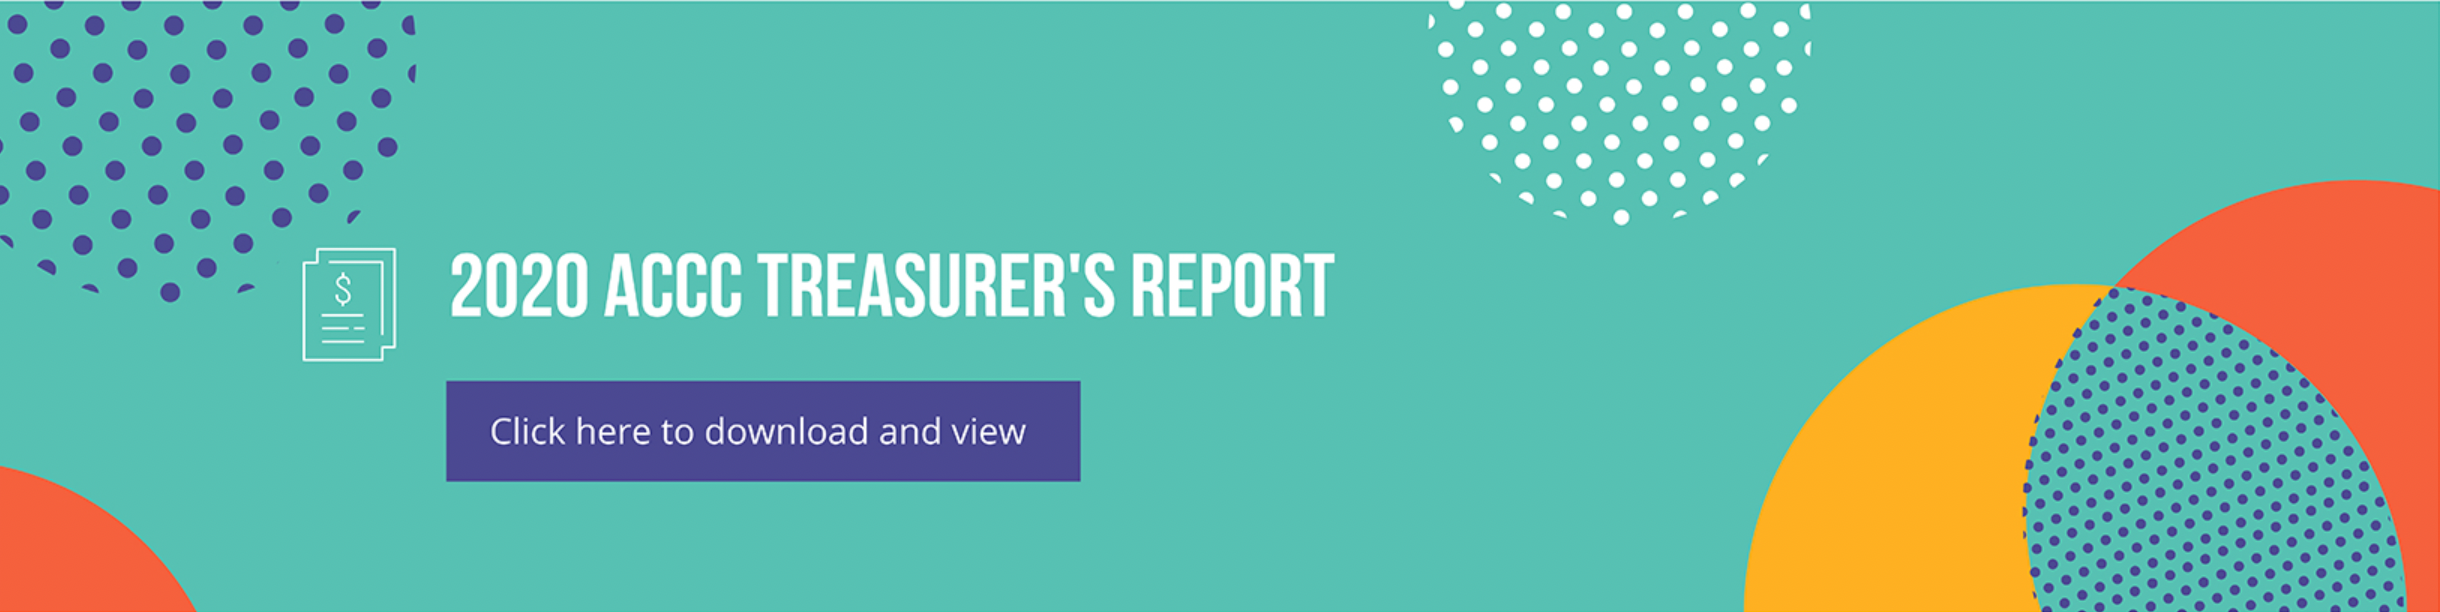 Download the 2020 ACCC Treasurer's Report